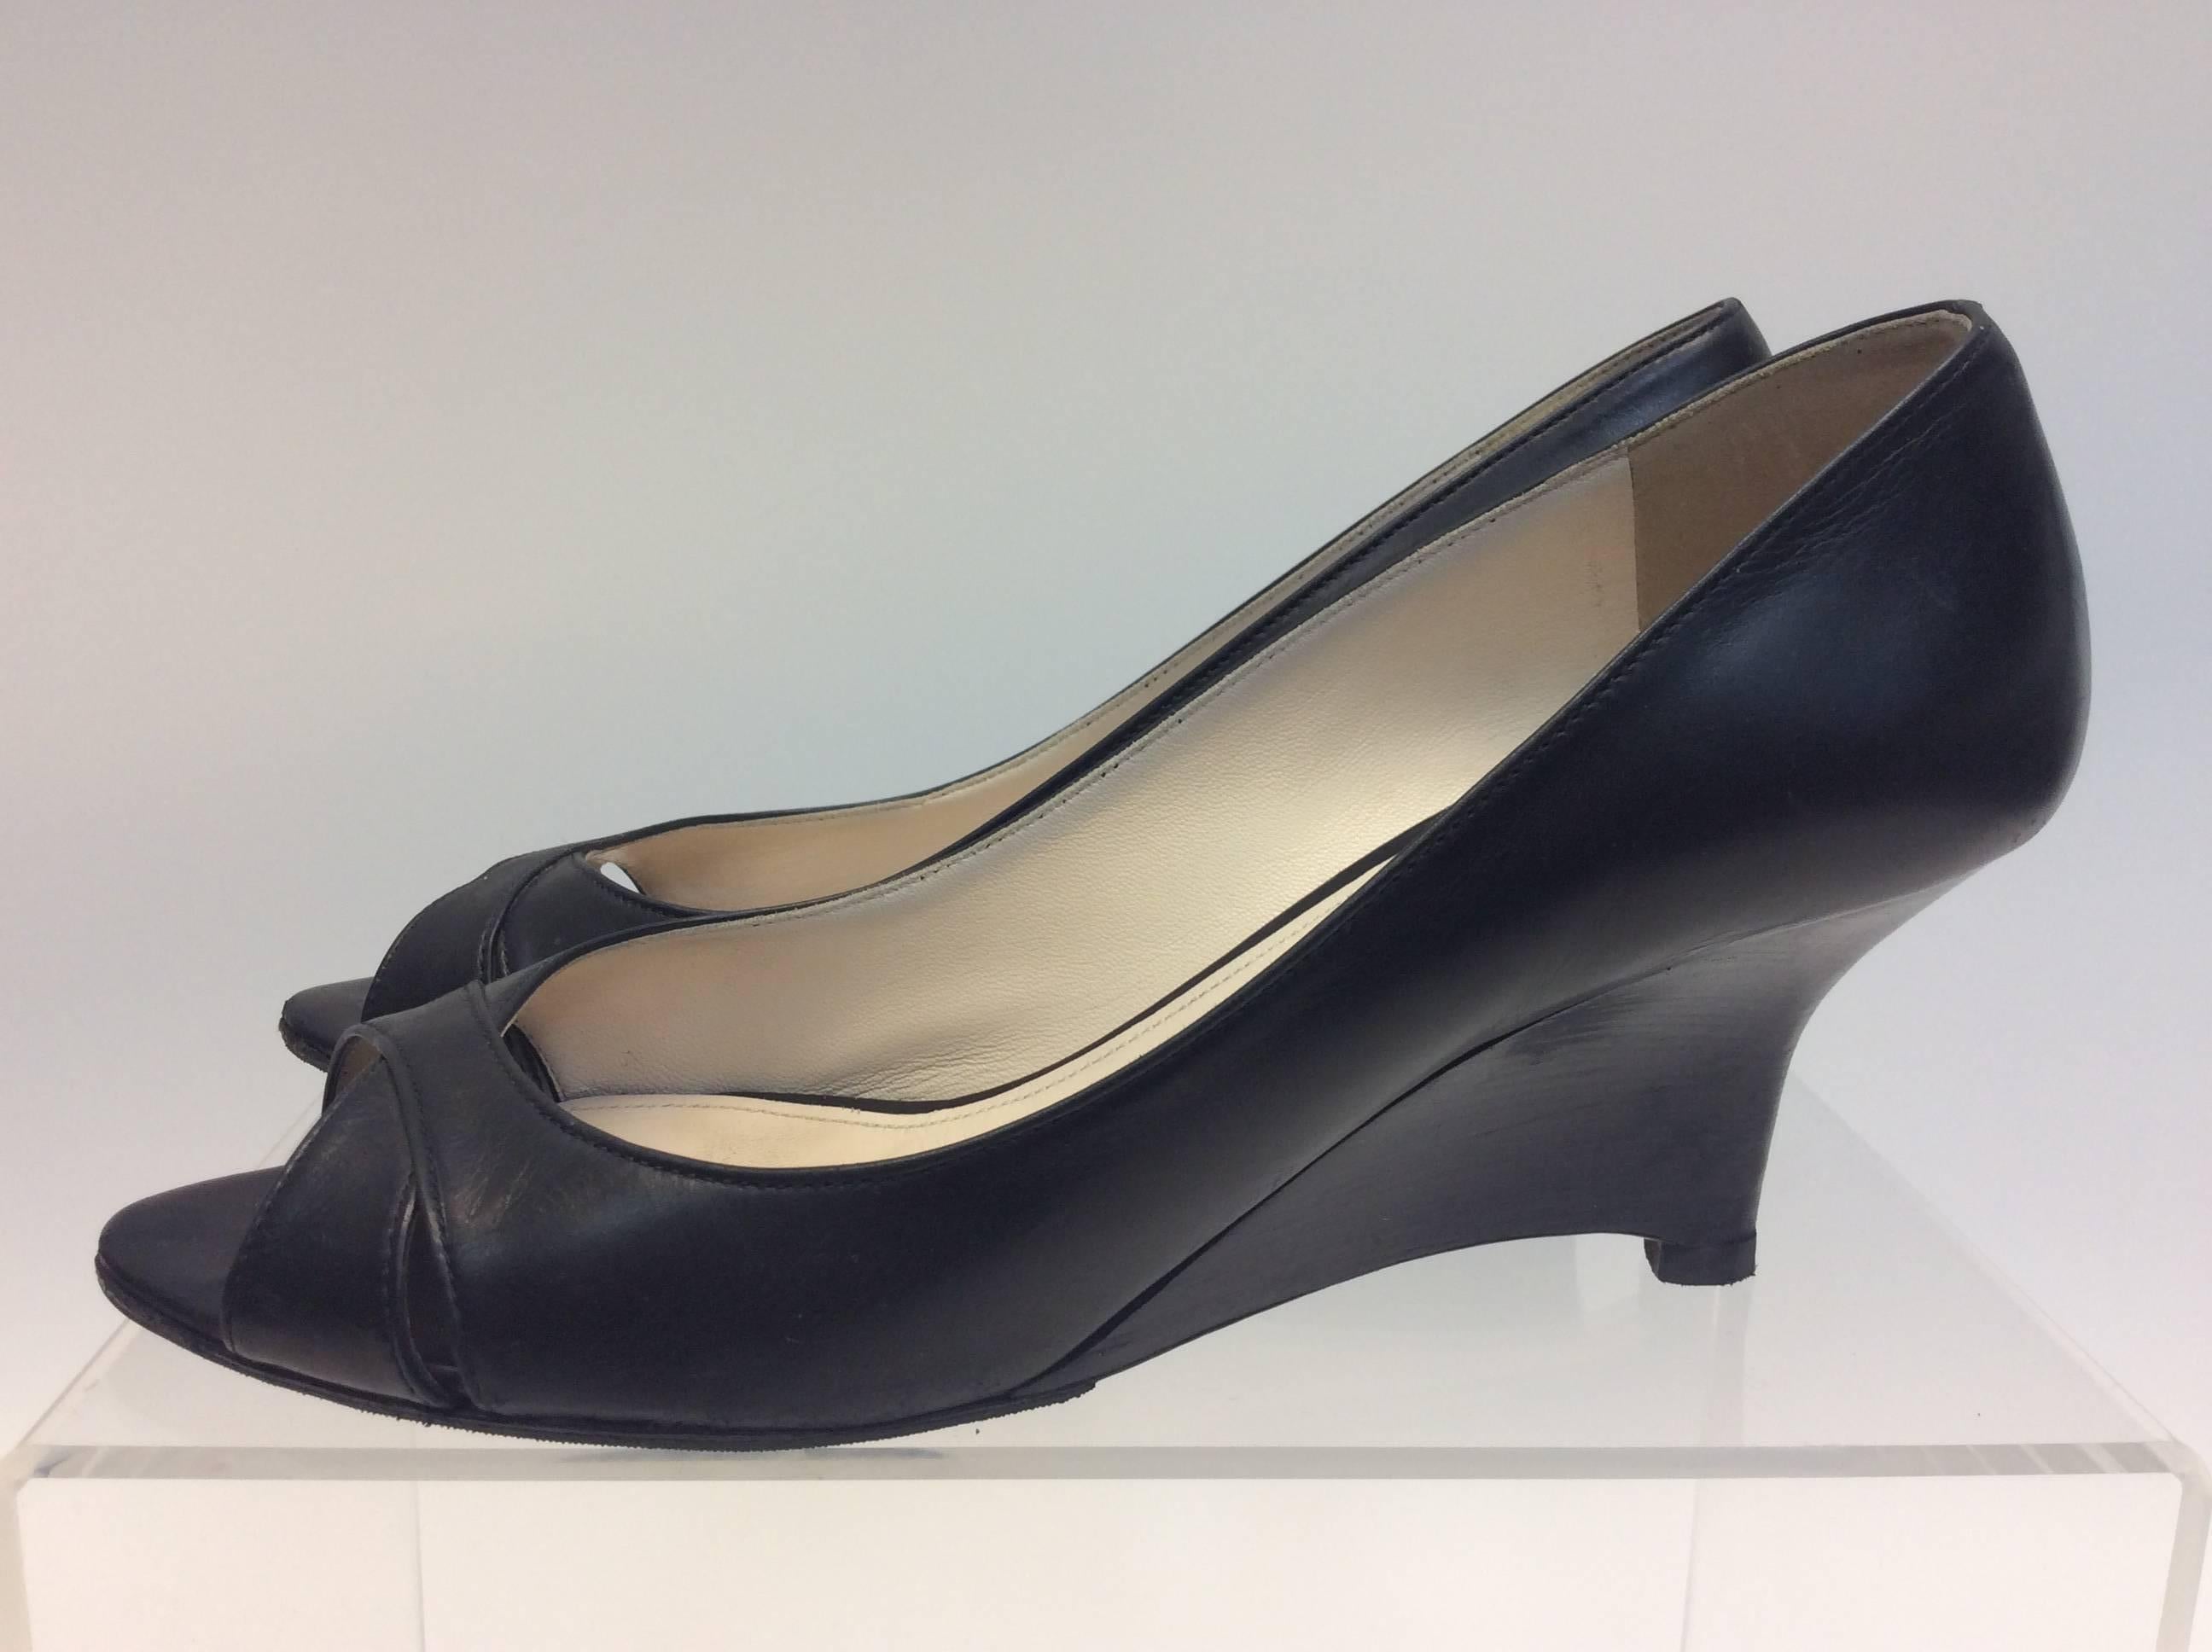 Prada Black Leather Peep Toe Wedge
$250
Made in Italy
Leather
Size 39
2.5” heel